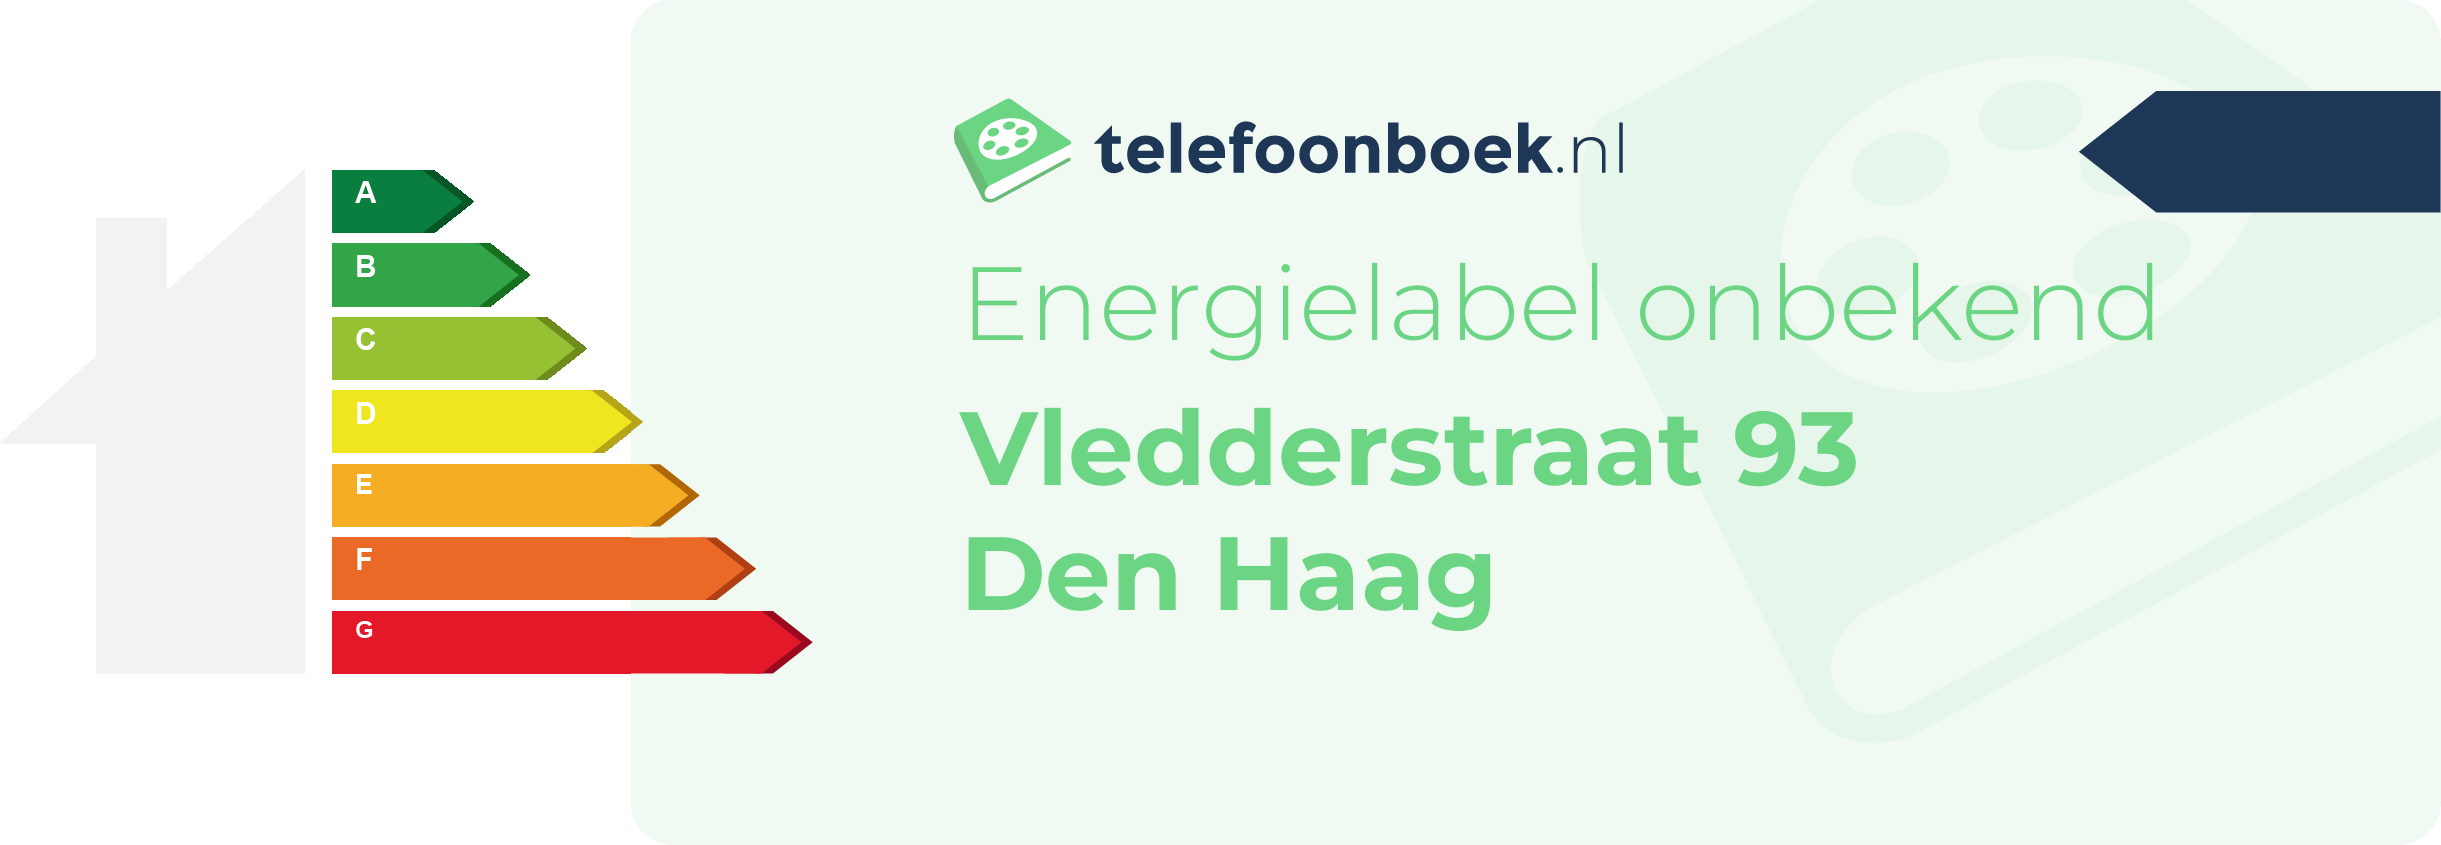 Energielabel Vledderstraat 93 Den Haag